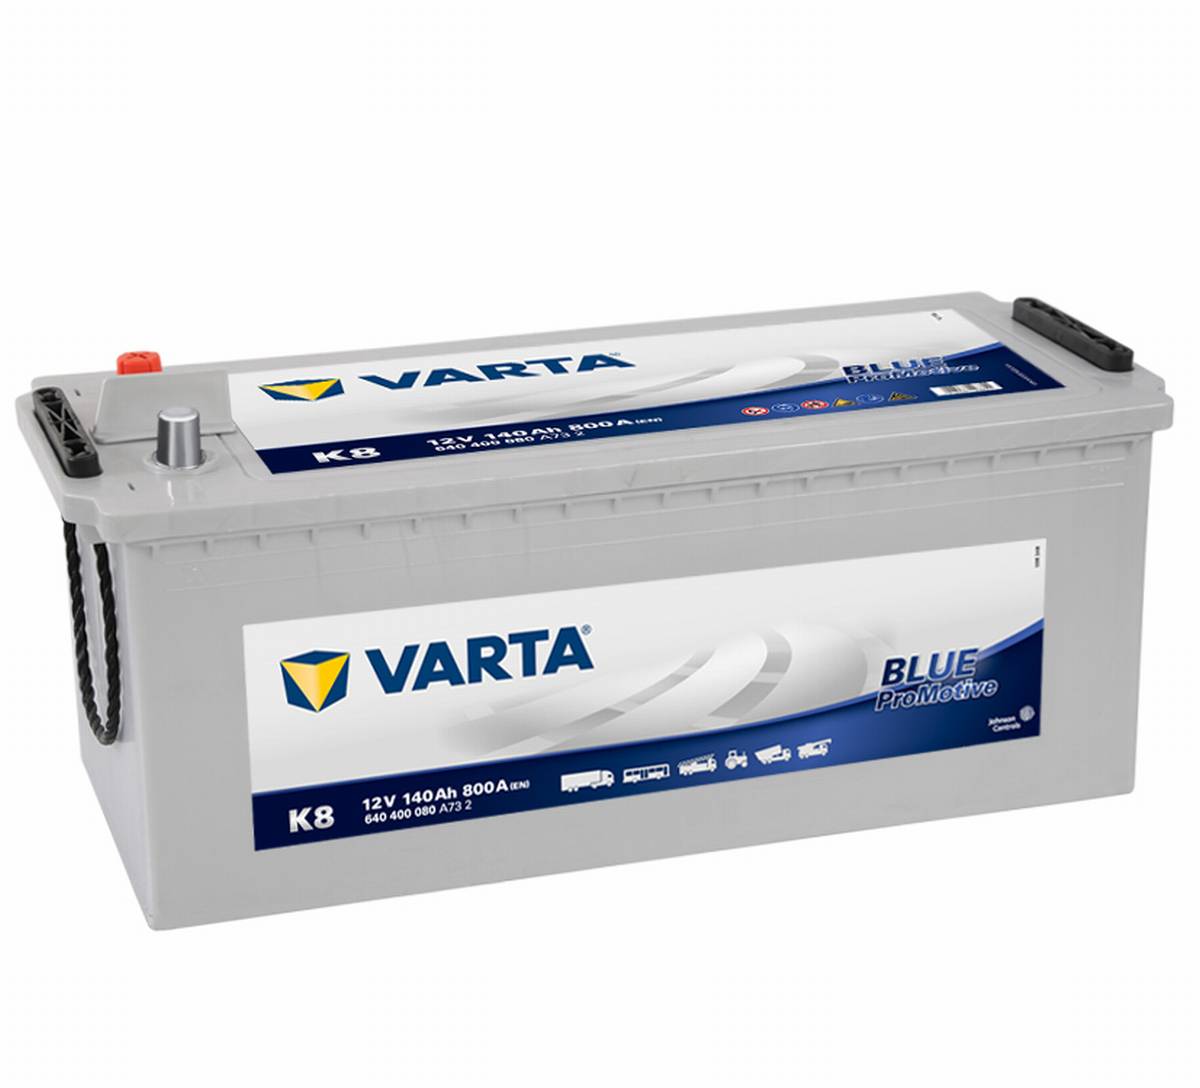 Varta K8 ProMotive Super Heavy Duty 12V 140Ah 800A Truck Battery 640 400 080